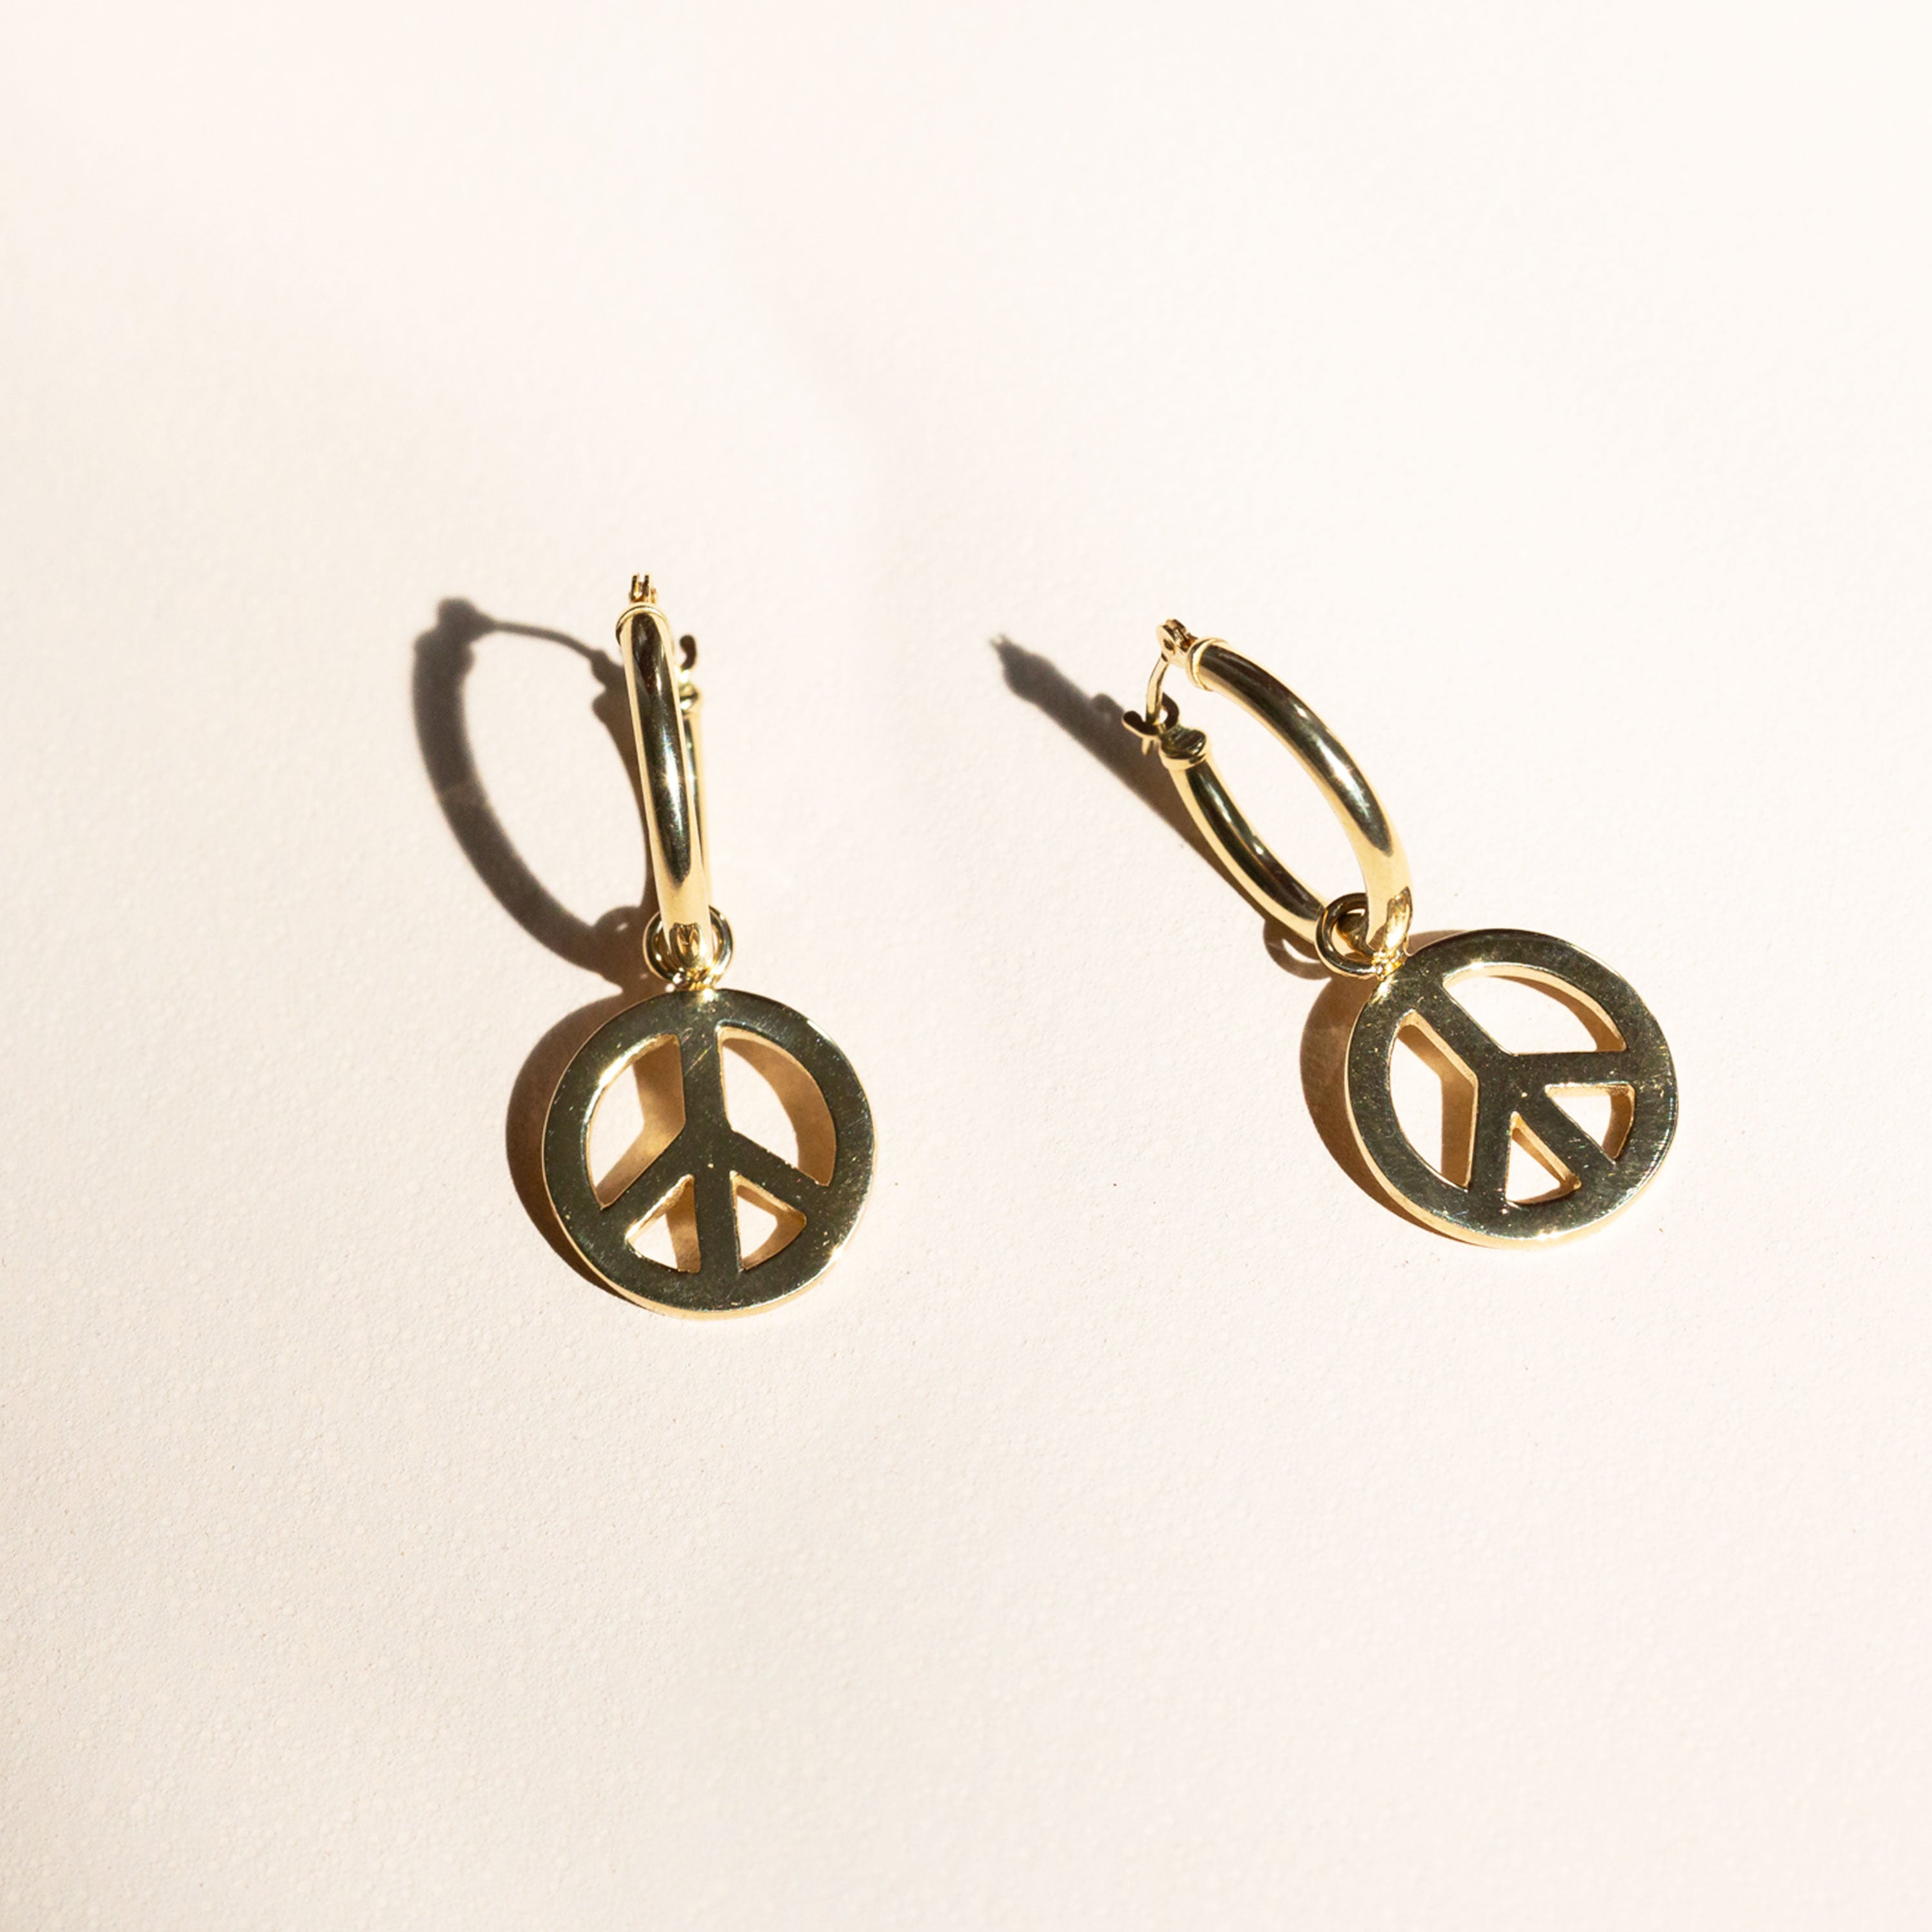 The F&B Peace Sign Charm Earrings